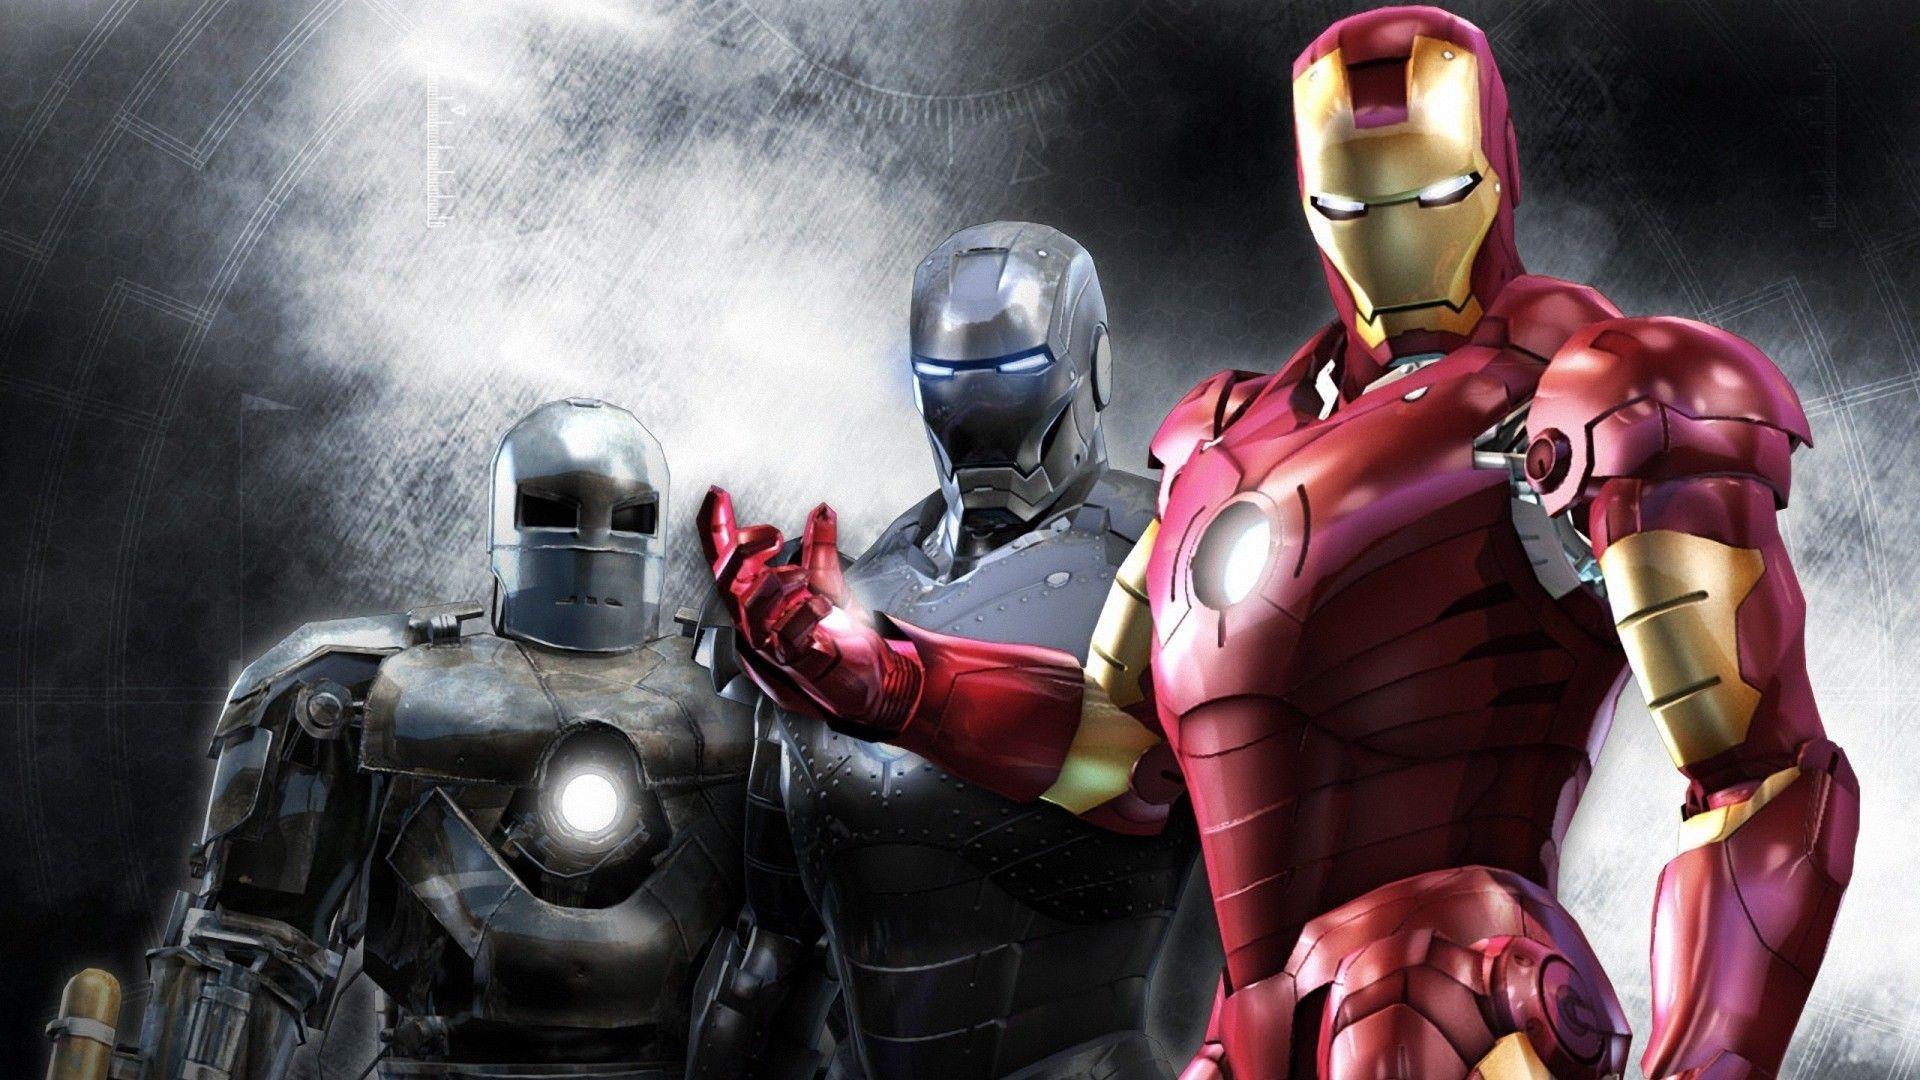 Wallpaper For > Iron Man Avengers Suit Wallpaper